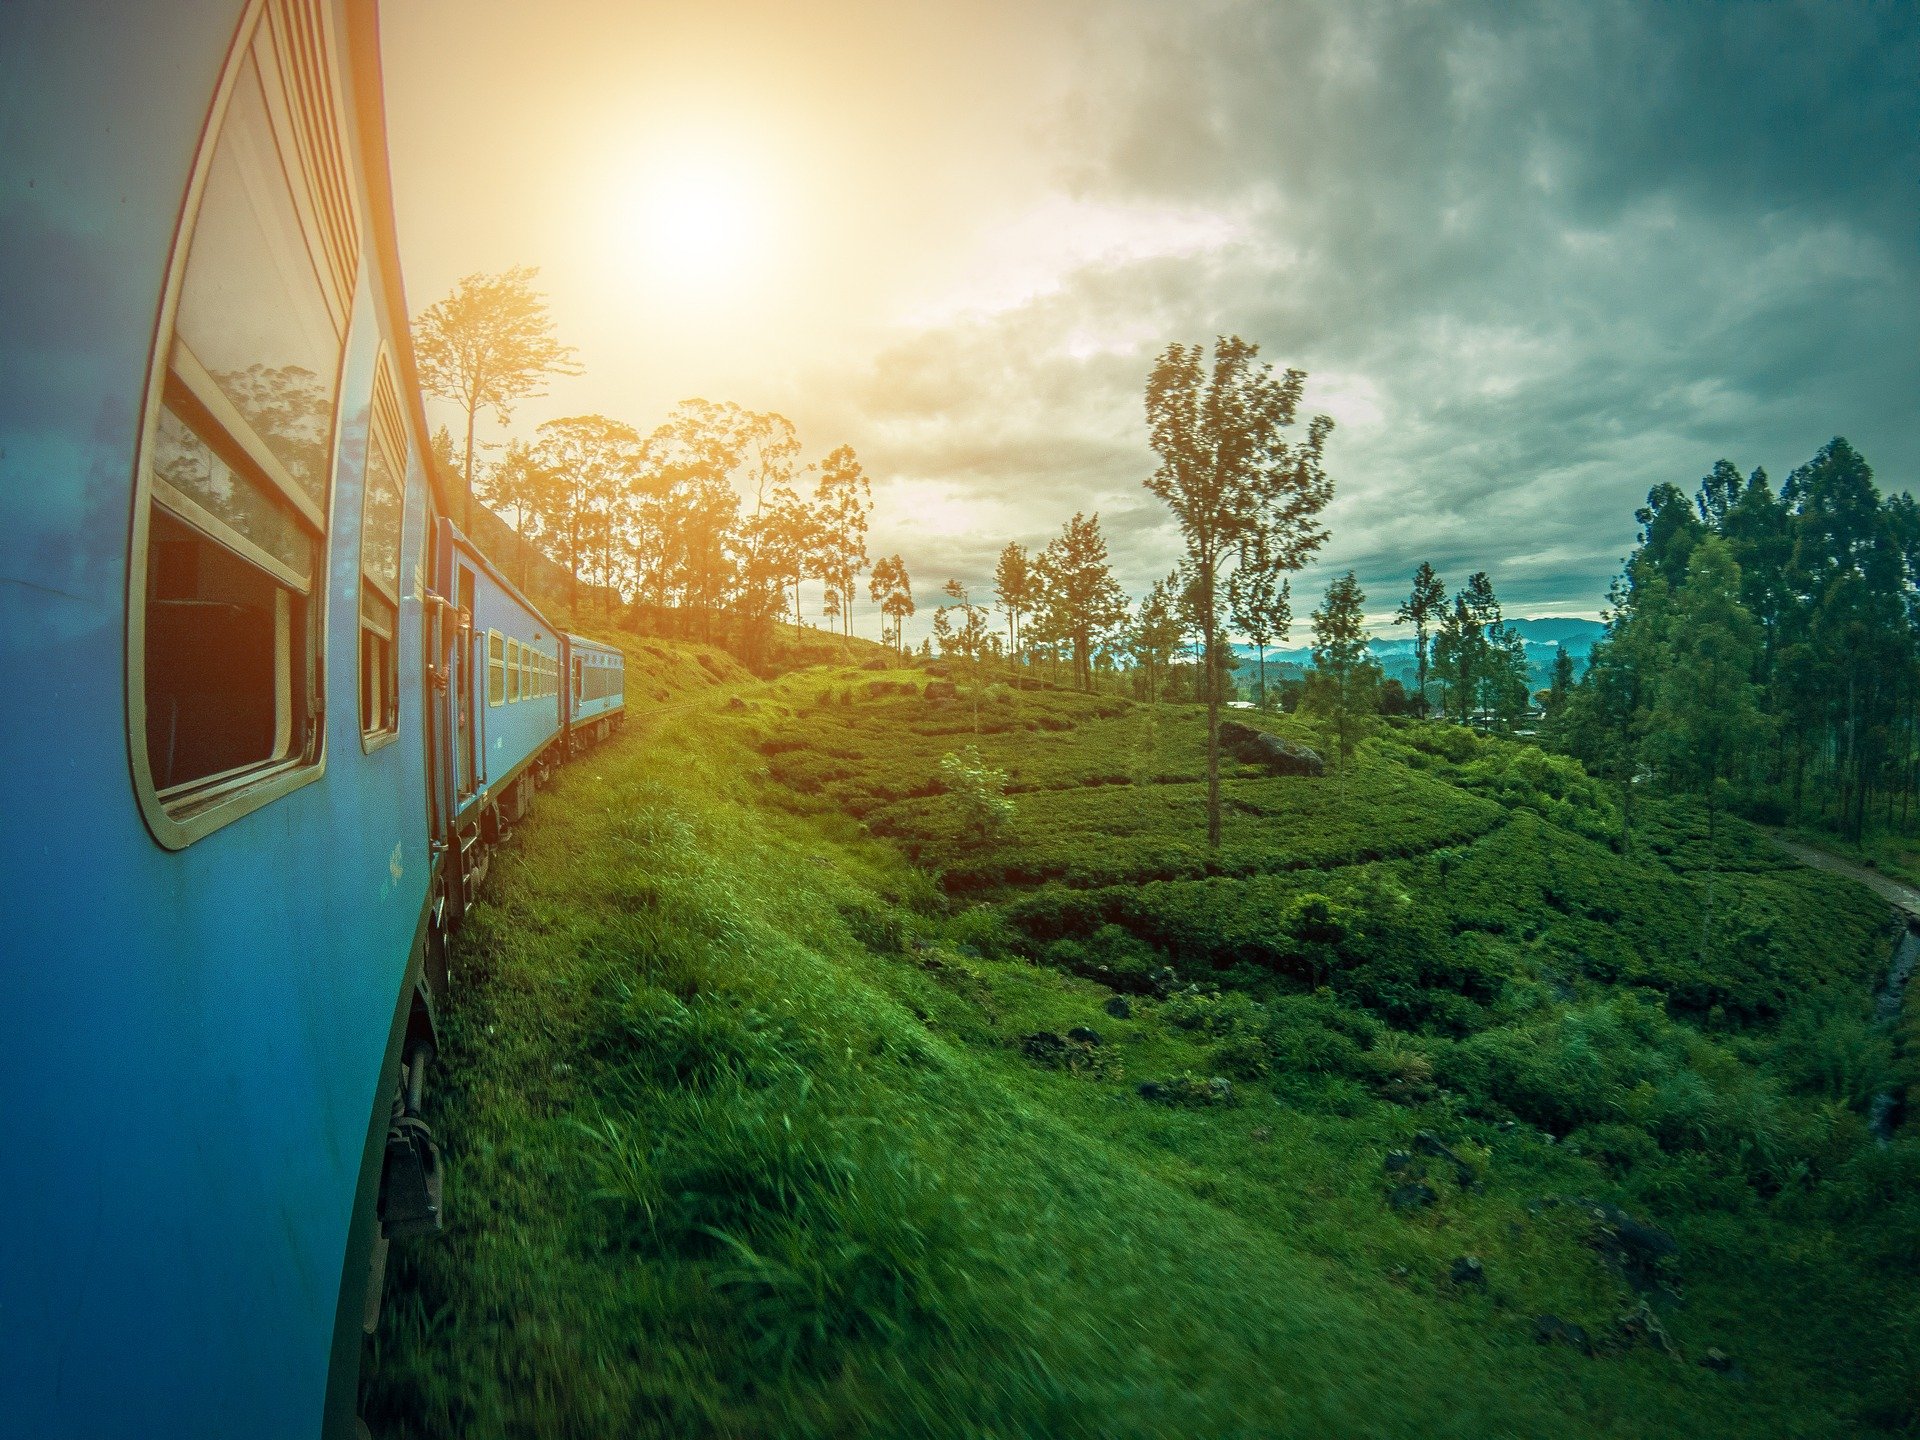 srilanka-Train